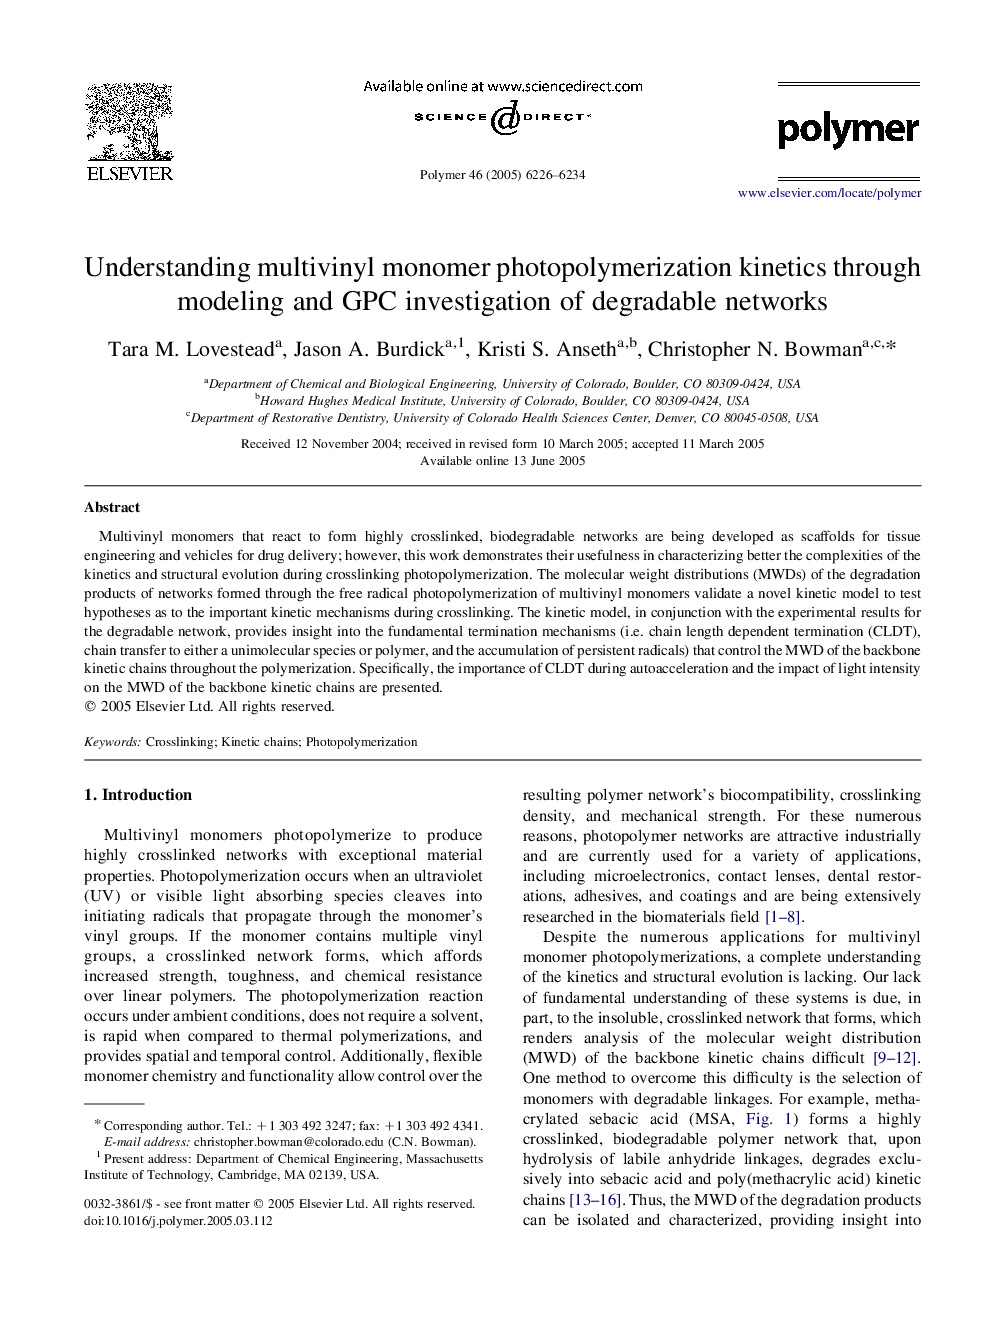 Understanding multivinyl monomer photopolymerization kinetics through modeling and GPC investigation of degradable networks